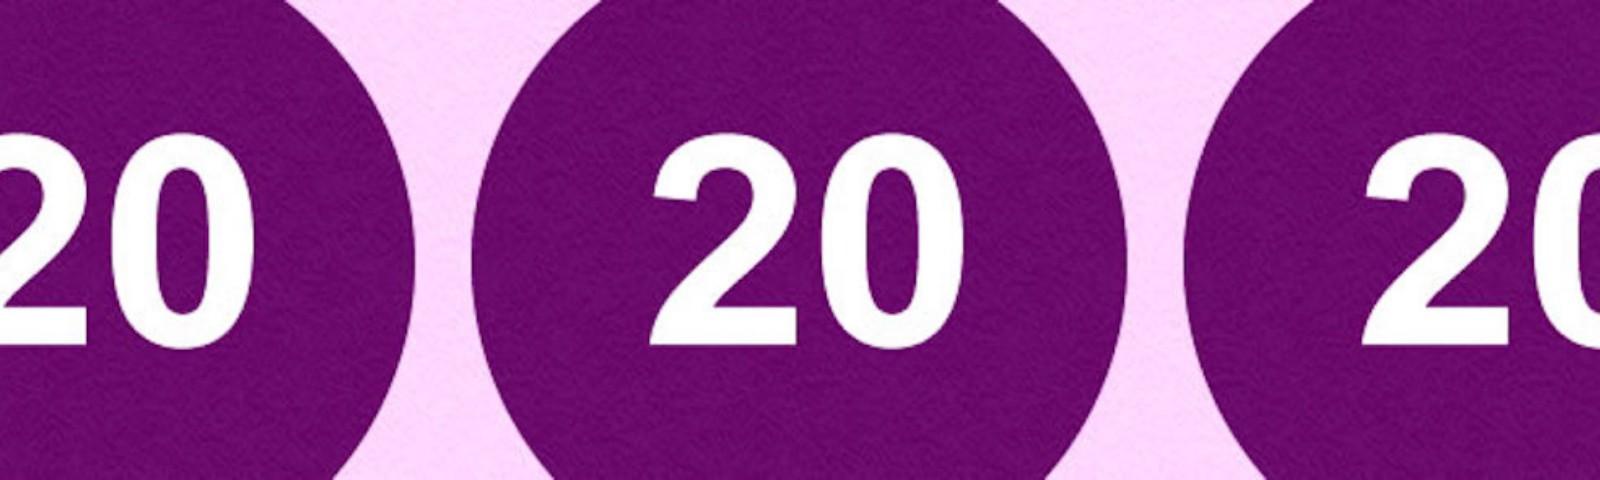 20 2020 дата. Правило 20 20 20 для глаз. 20/20(). 20:20 4g. 20-20-20 Rule.